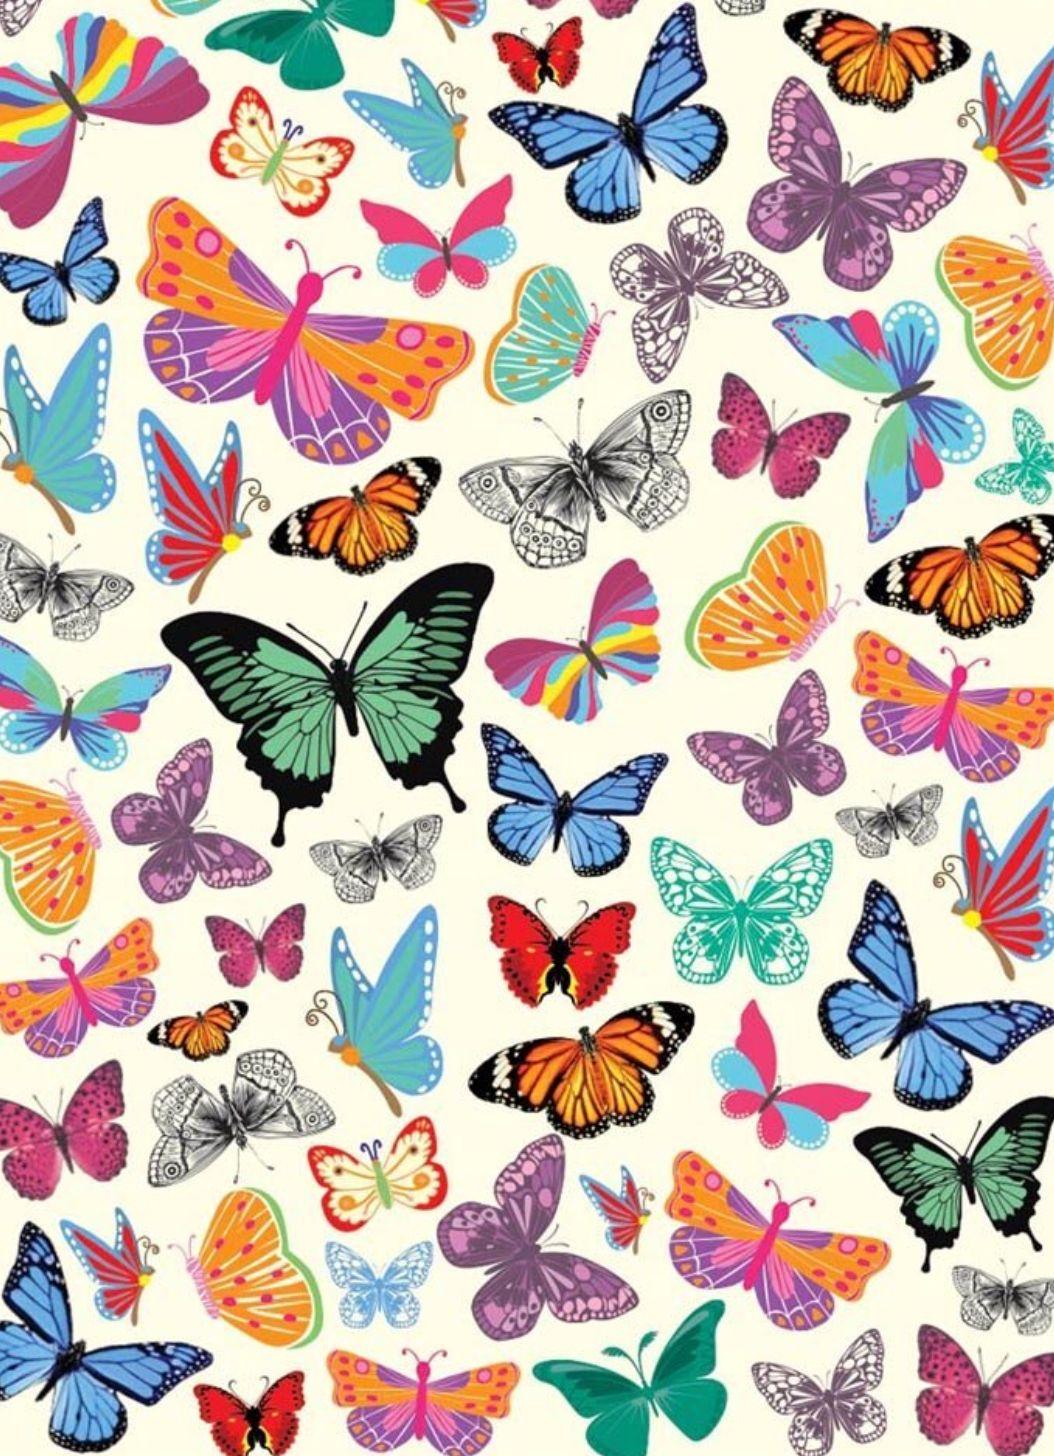 Butterfly Pattern. Butterfly wallpaper, Artsy background, iPhone